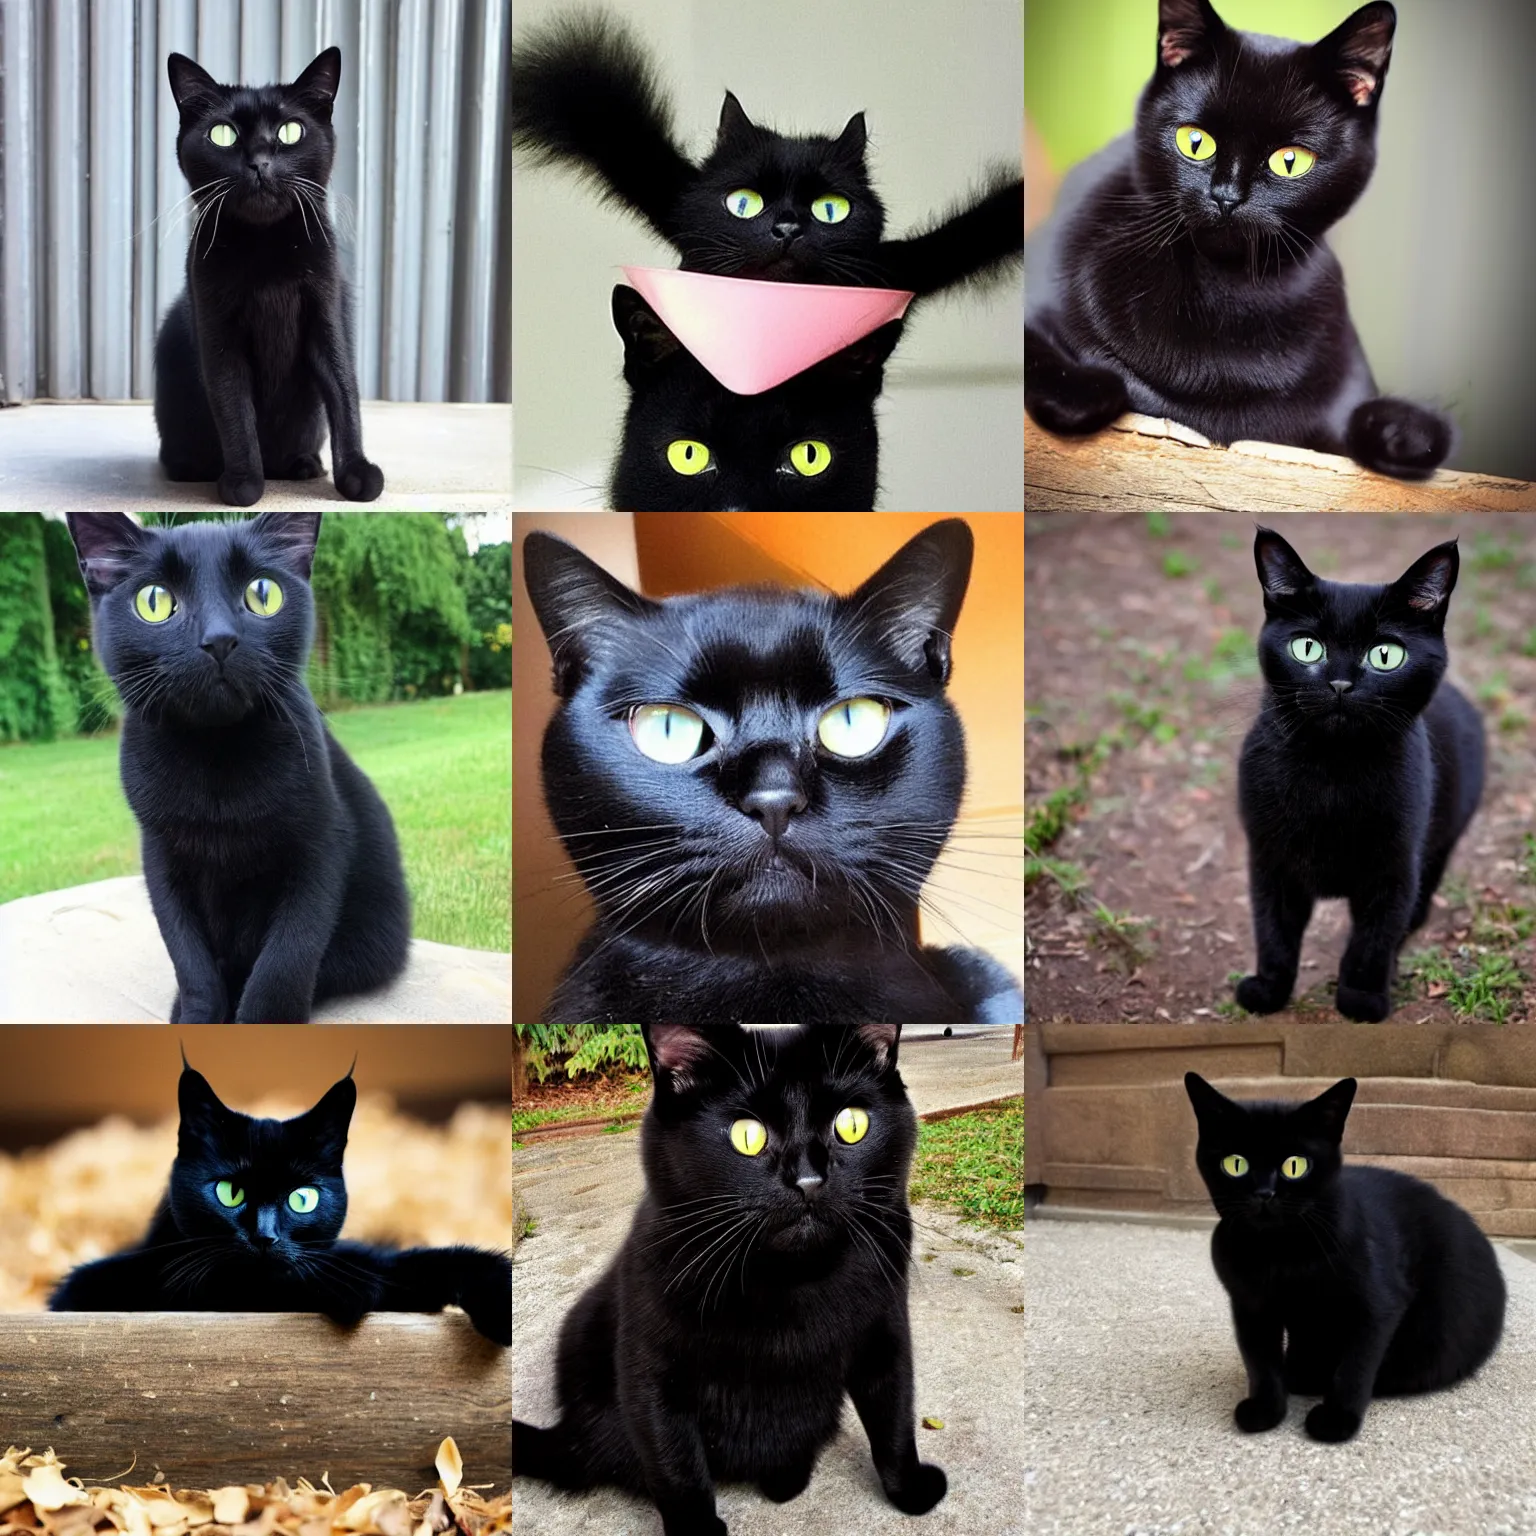 Prompt: cutest black cat in the universe, award - winning photo